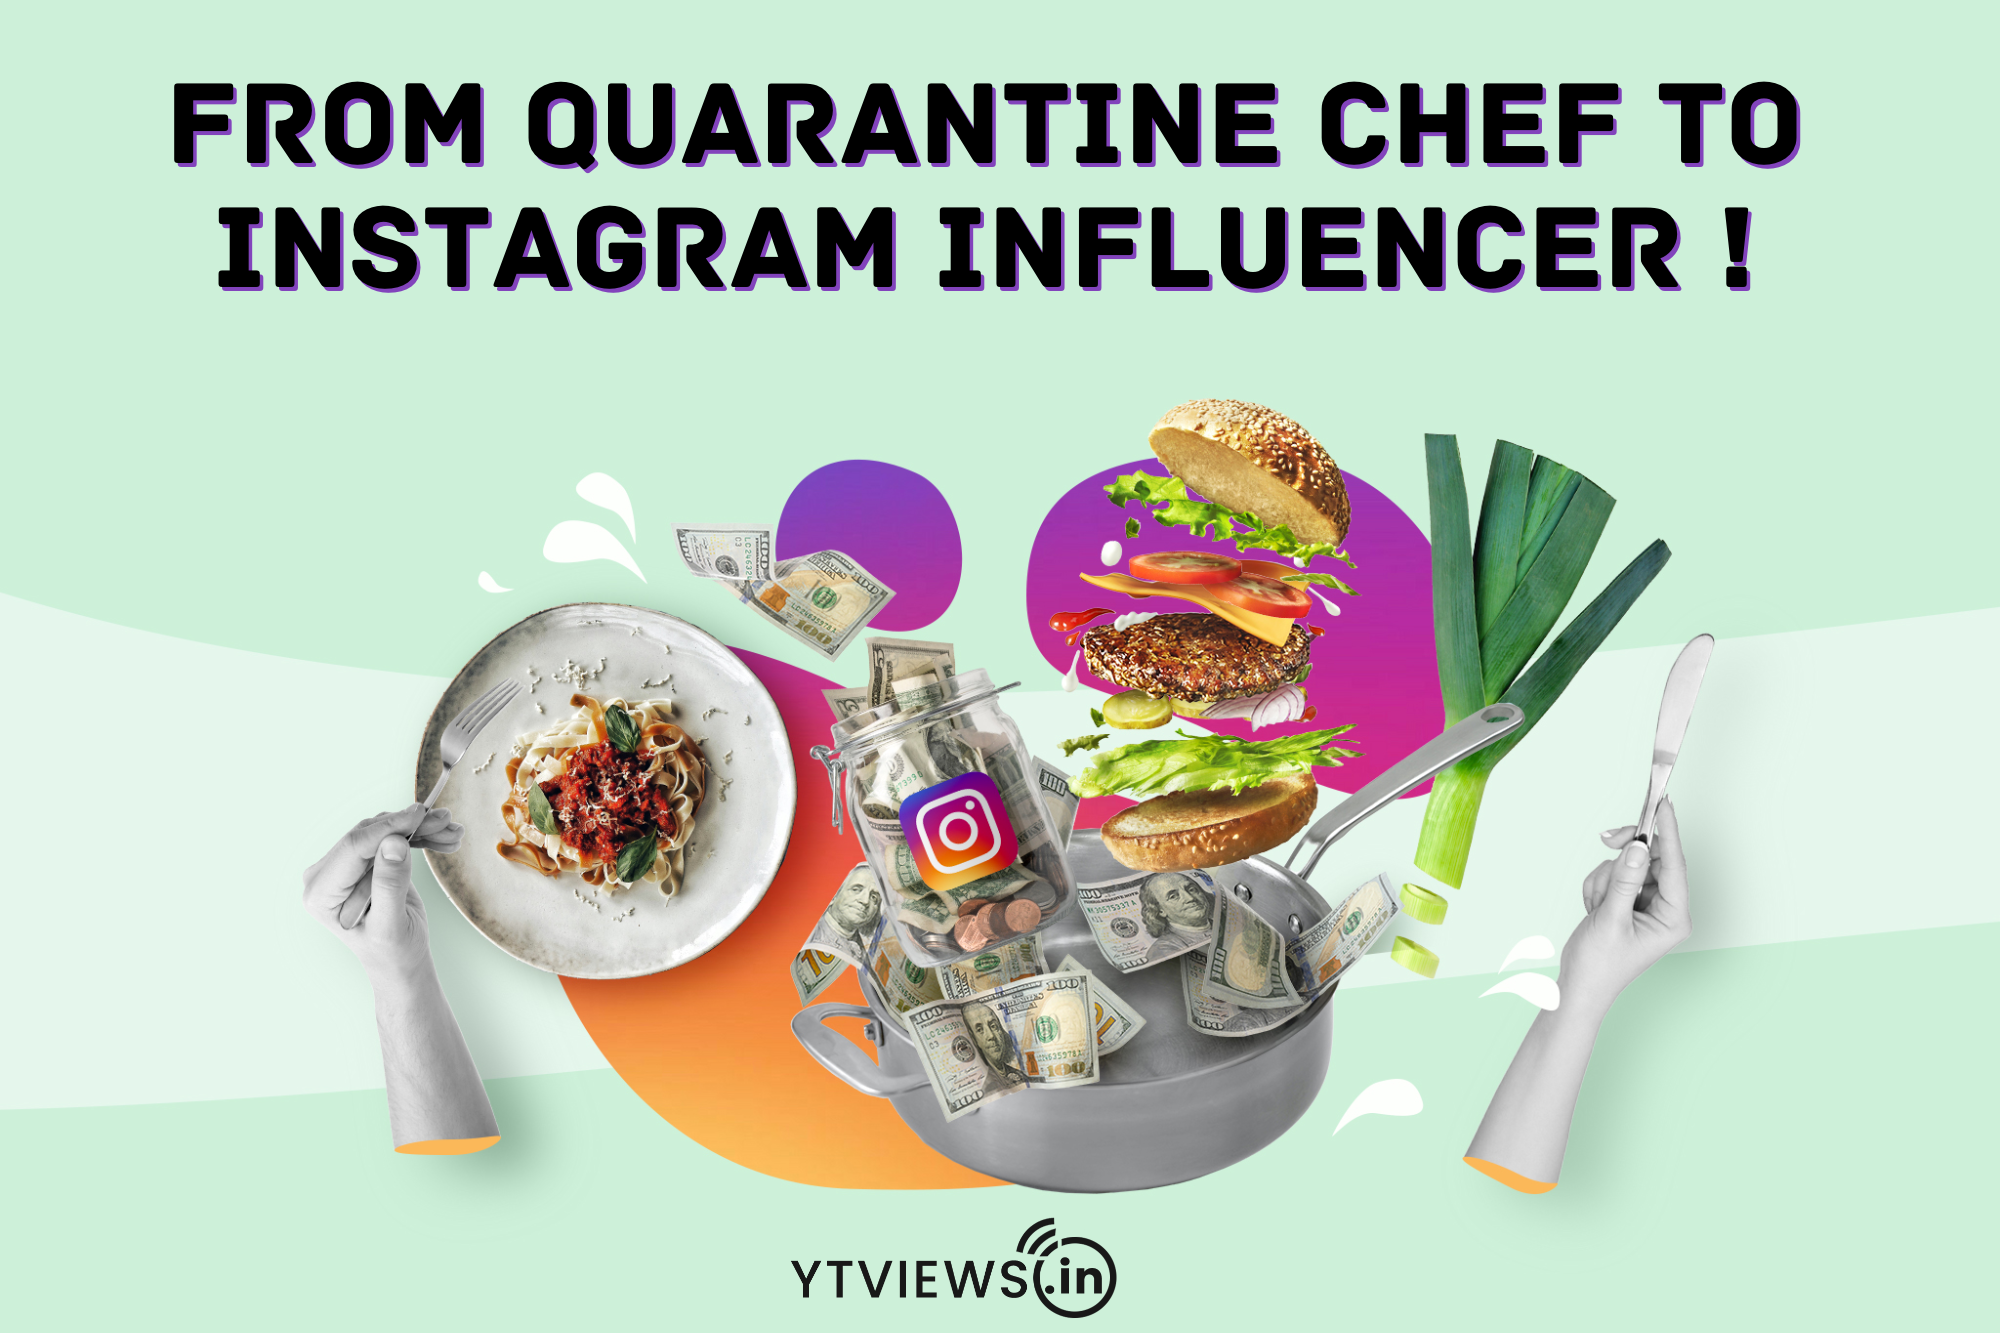 From quarantine chef to Instagram influencer!